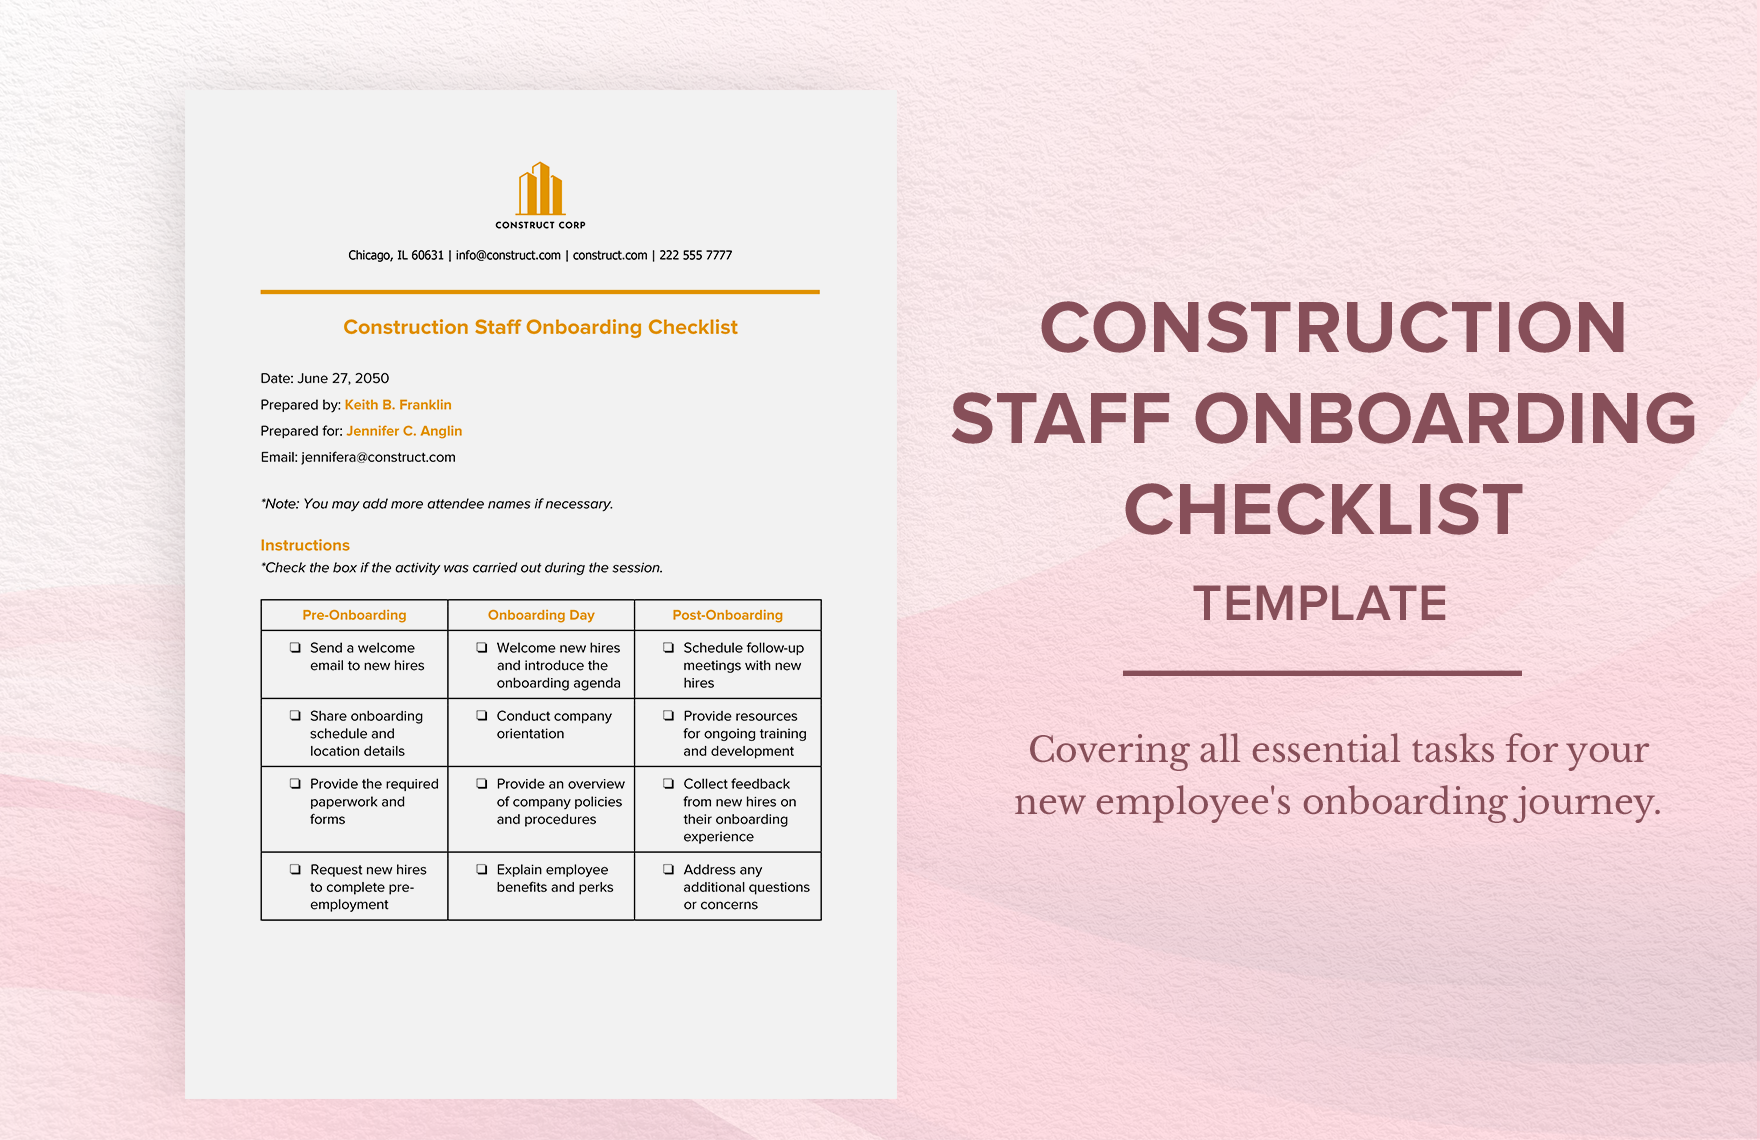 Construction Staff Onboarding Checklist Template